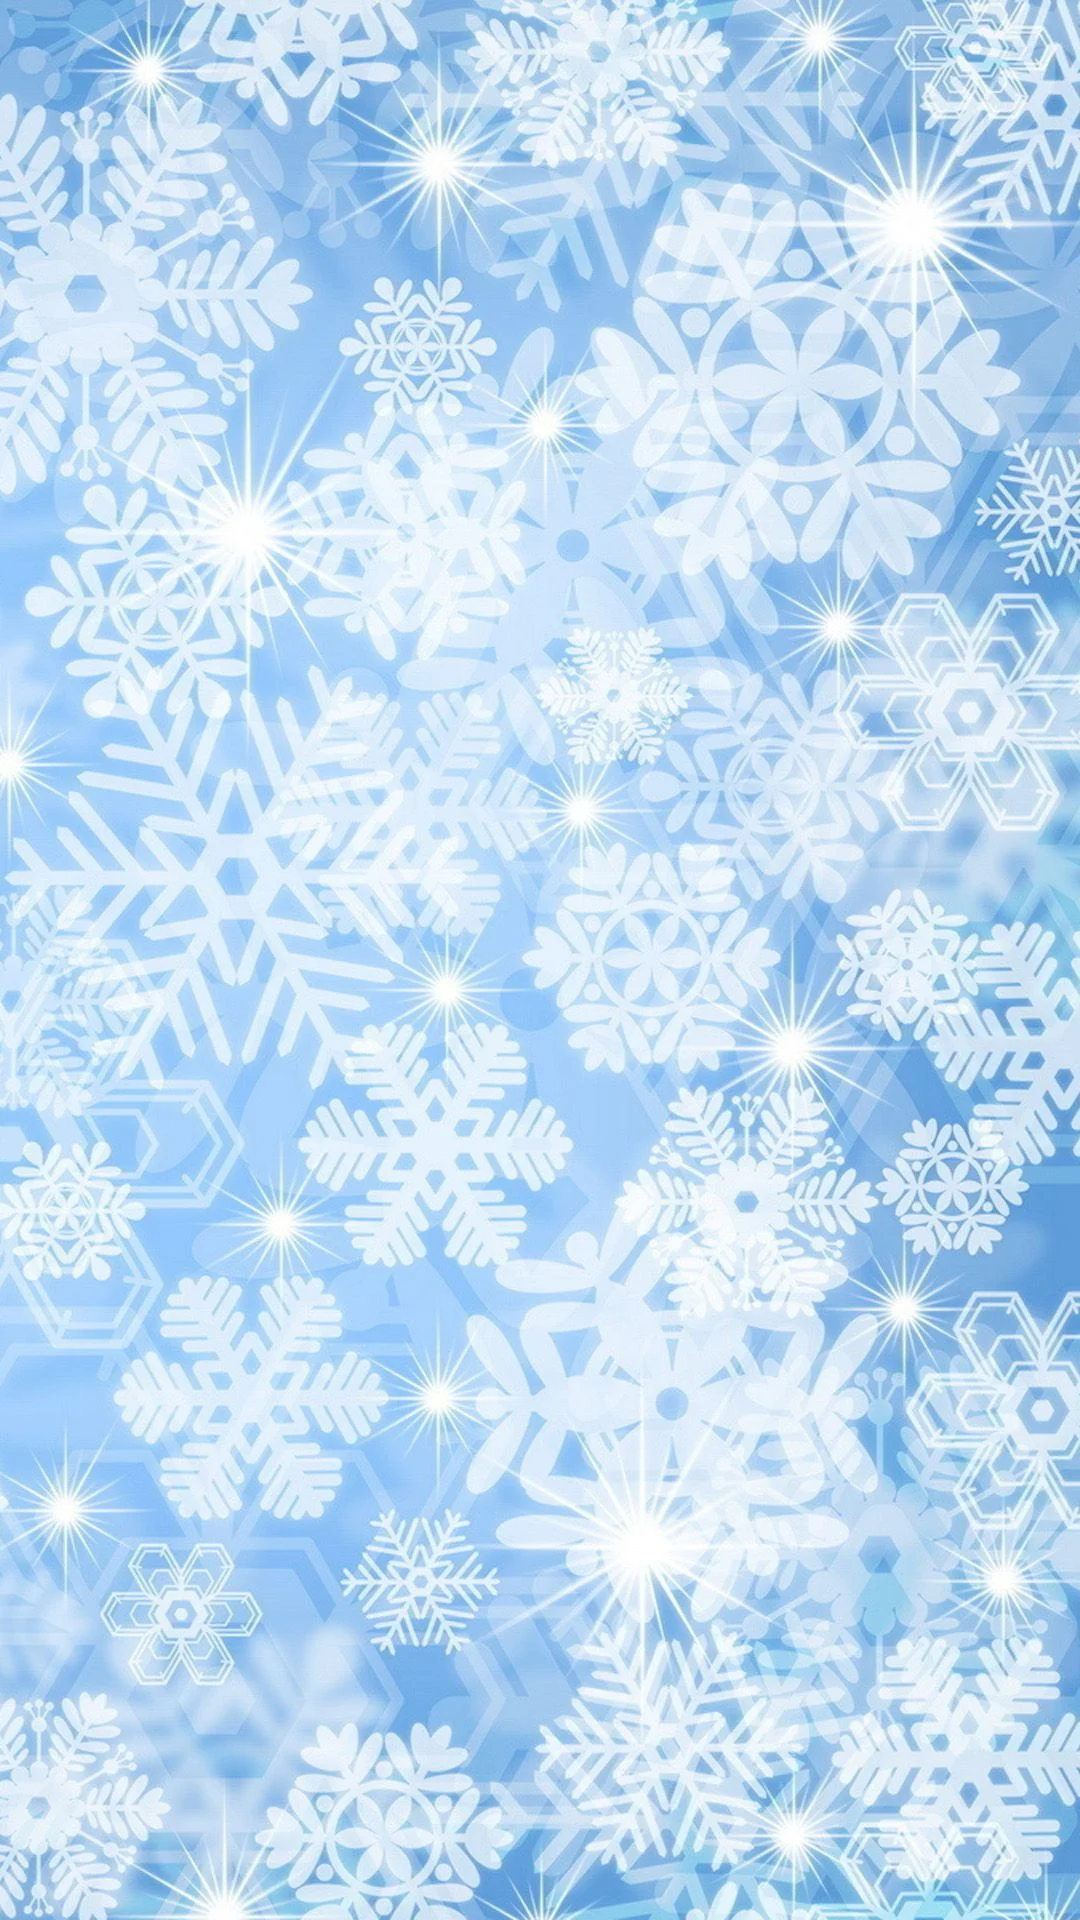 1080x1920 Christmas Snowflake iPhone Wallpapers Top Free Christmas Snowflake iPhone Backgrounds